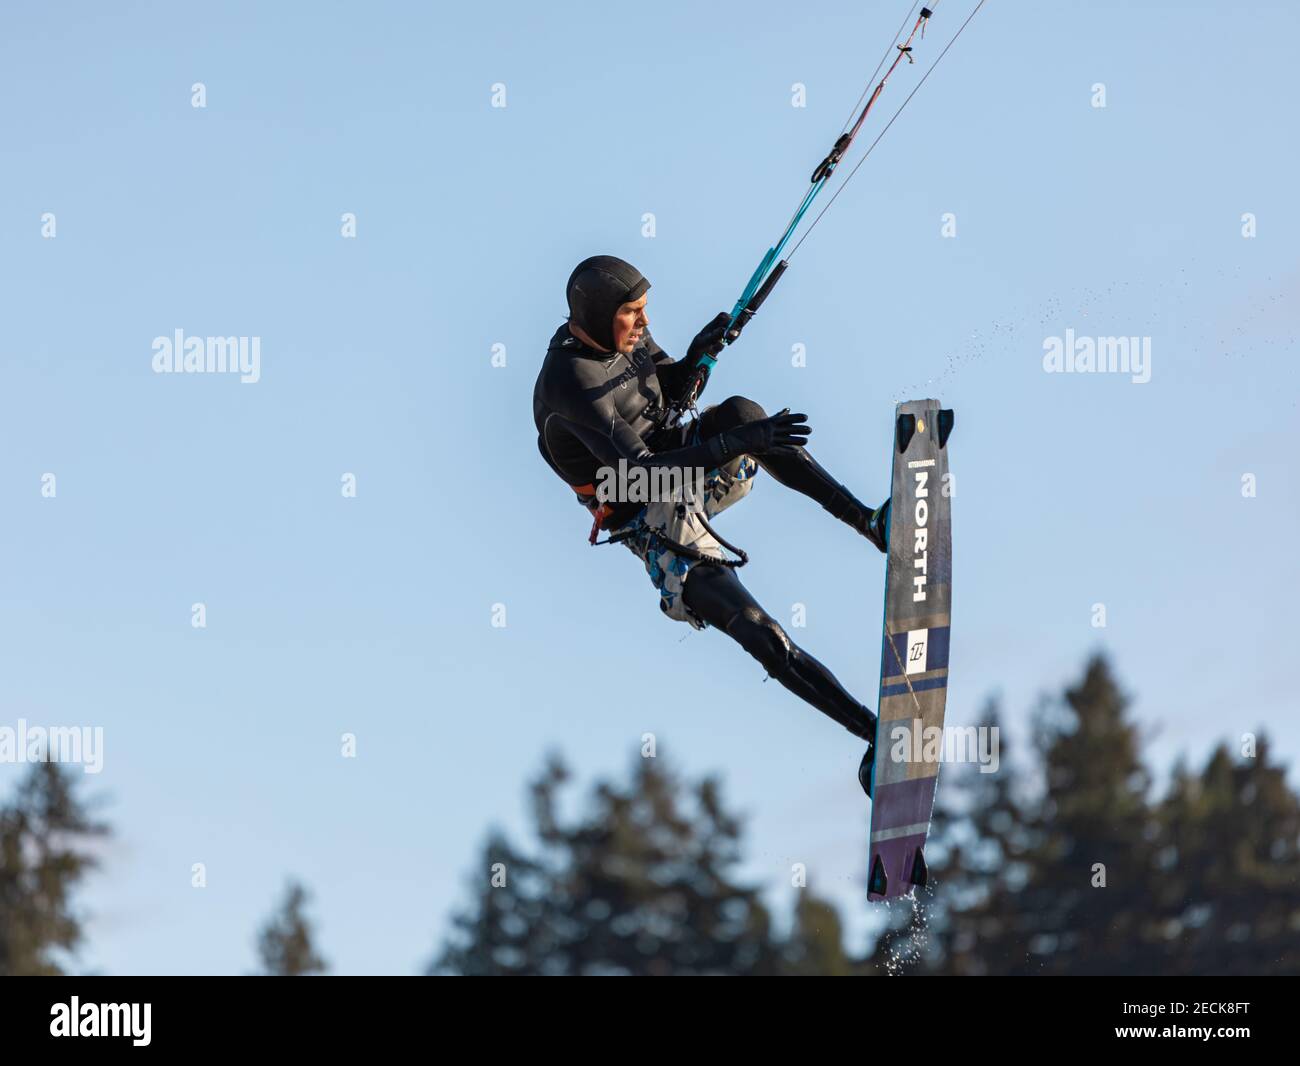 Ein Kiteboarder springt in die Luft. Boundary Bay, BC, Kanada-November 17,2020. Selektiver Fokus, Sportfoto, Reisefoto. Stockfoto